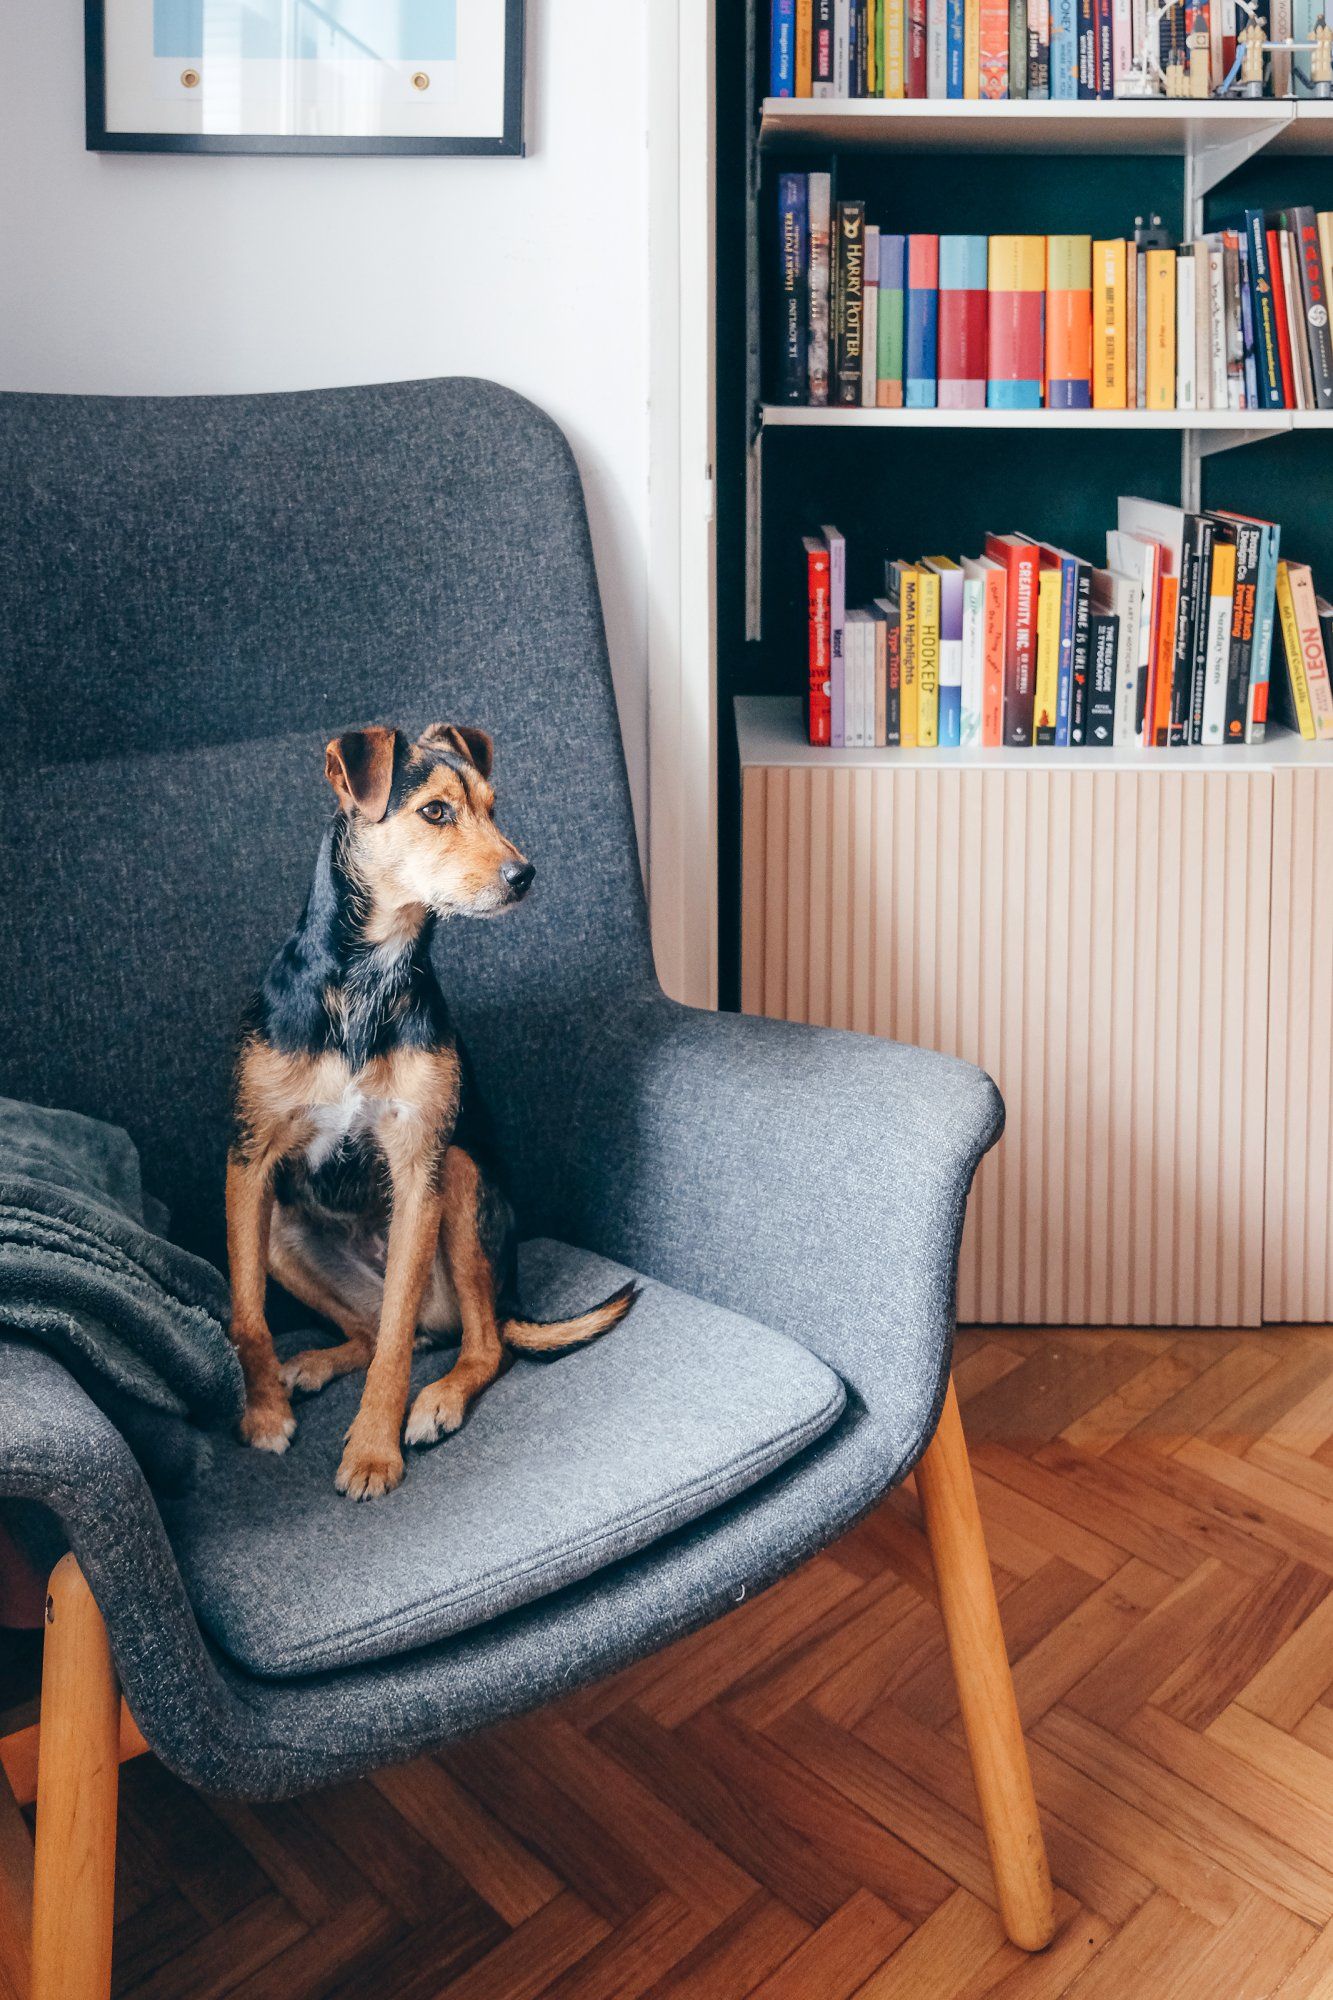 A dog sitting on a chair